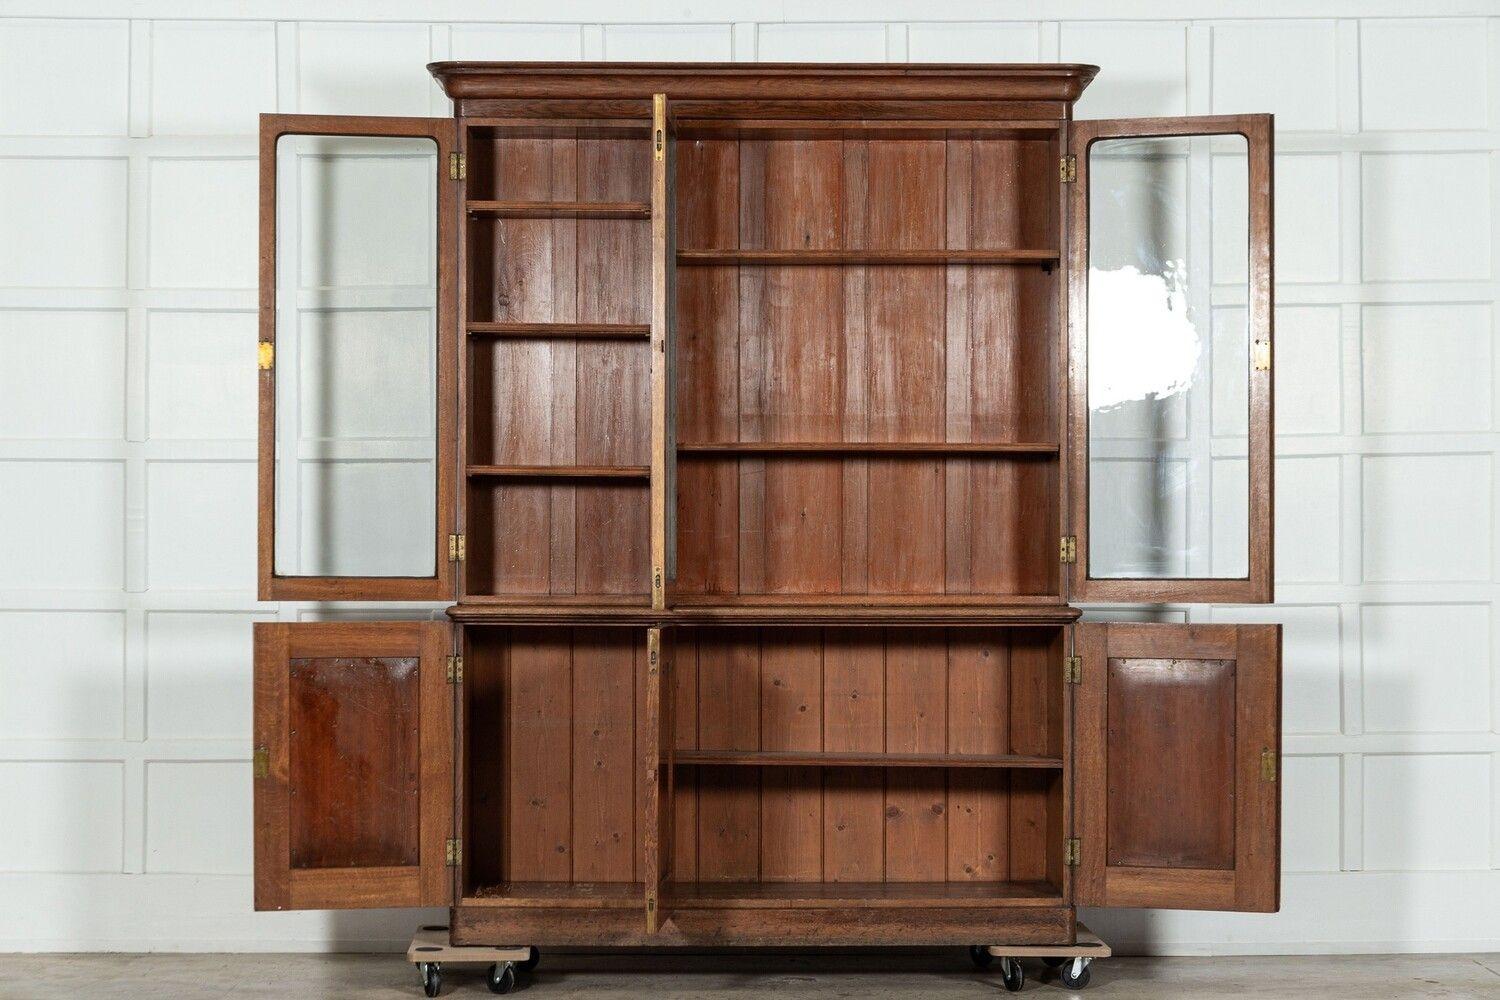 circa 1880
Large 19thC English Oak Glazed Bookcase
sku 1668
Base W157 x D46 x H84 cm
Top W168 x D42 x H134 cm
Together W168 x D46 x H218 cm